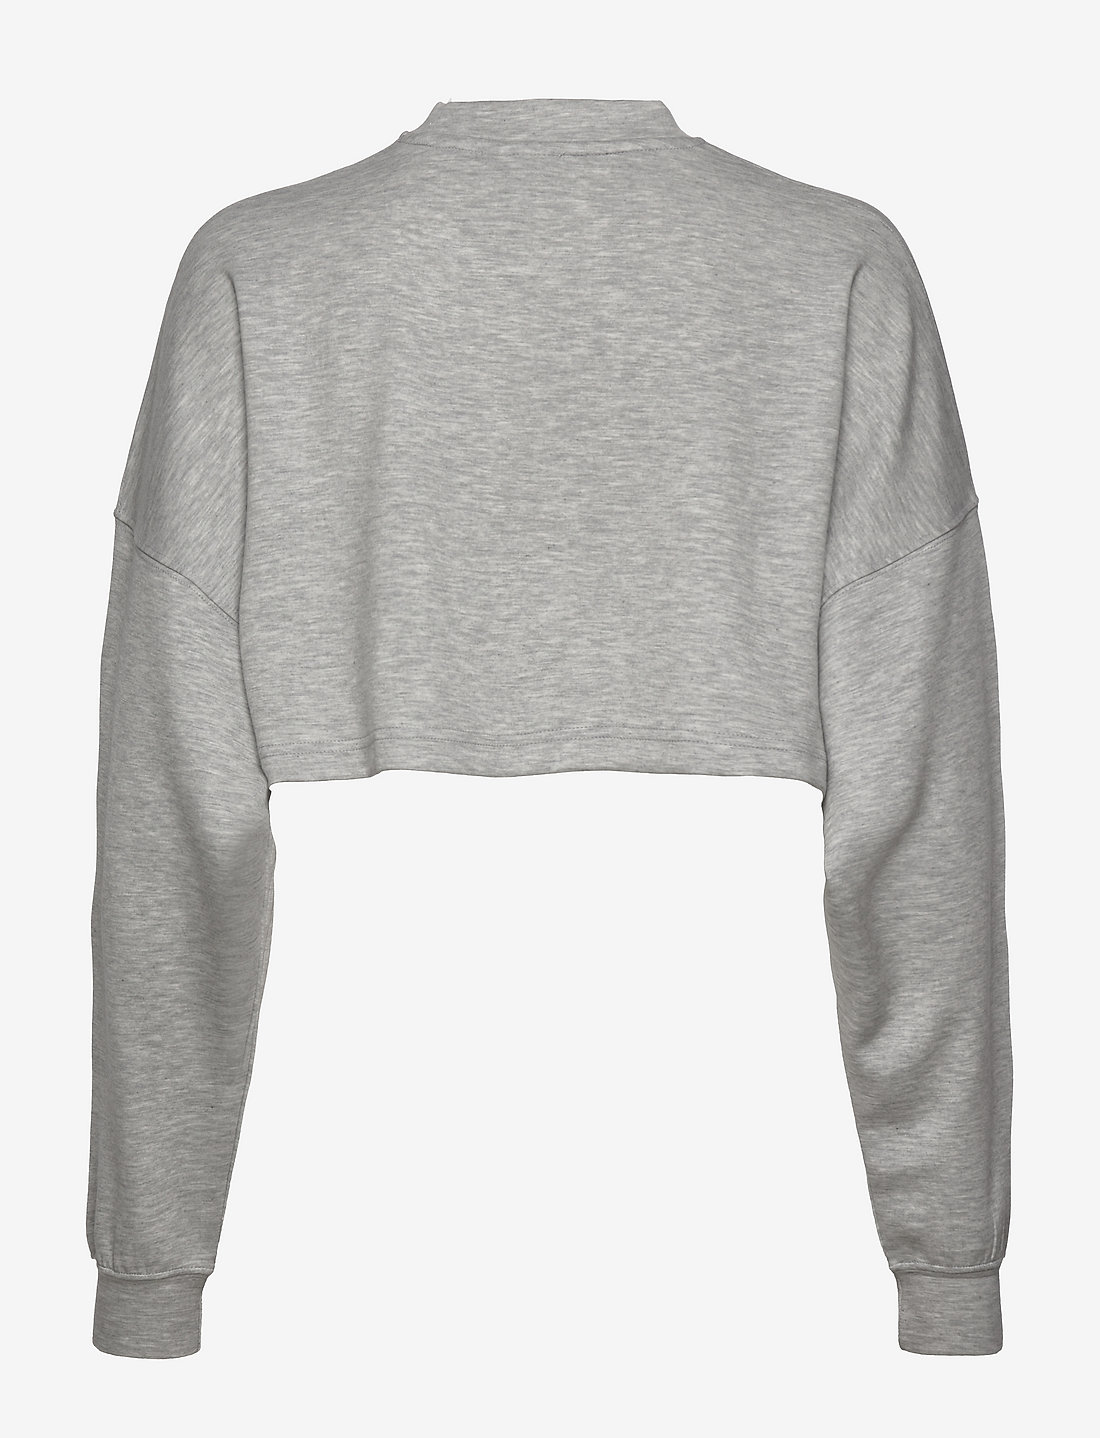 AIM'N Comfy Crop Sweatshirt - T-shirts & Tops 